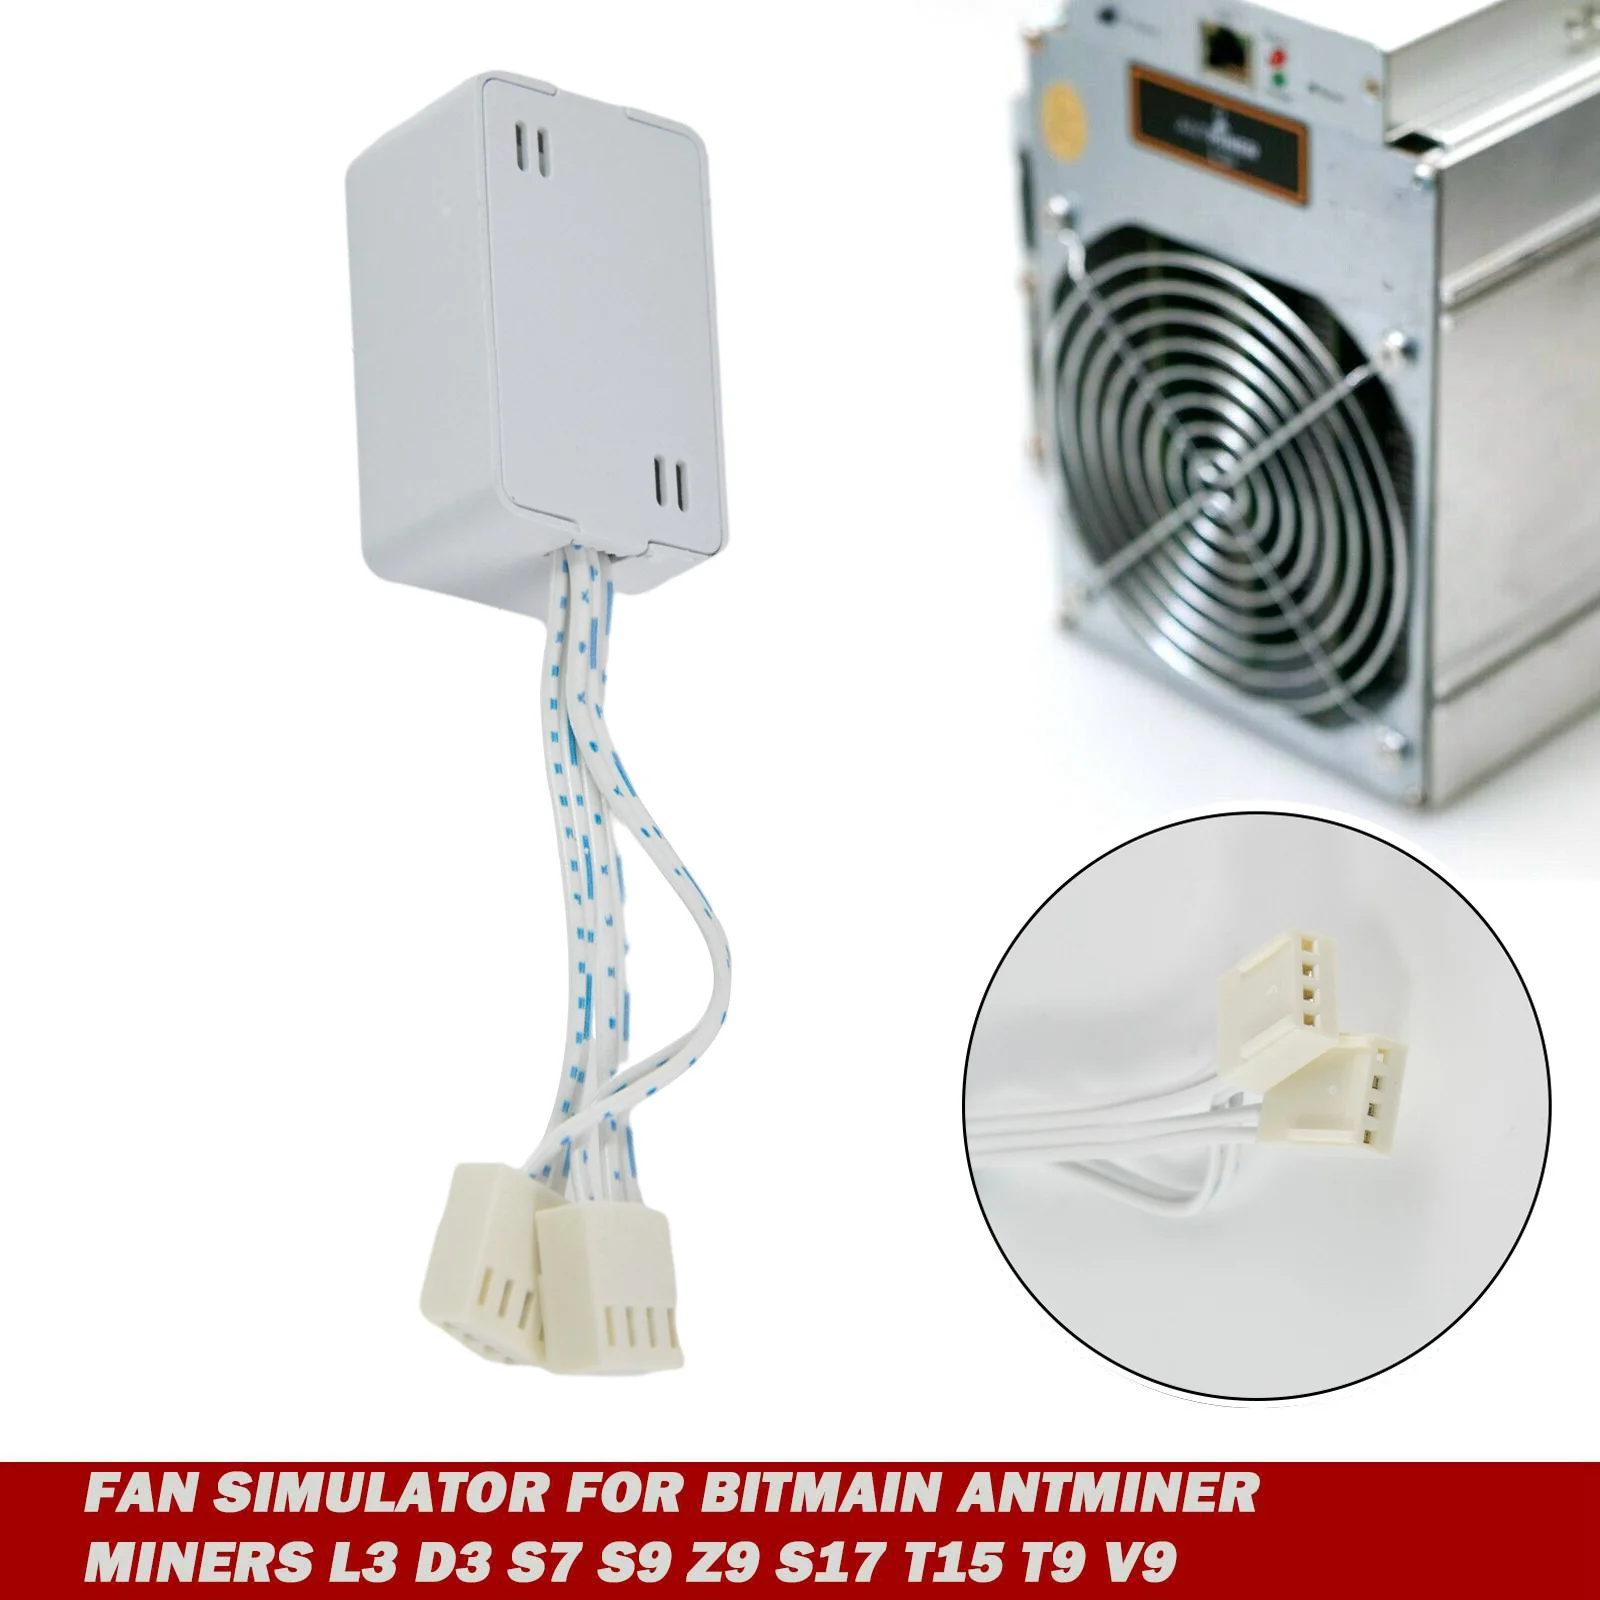 and similar FakeFan/Fan simlutator for Antminer S9 2pcs 